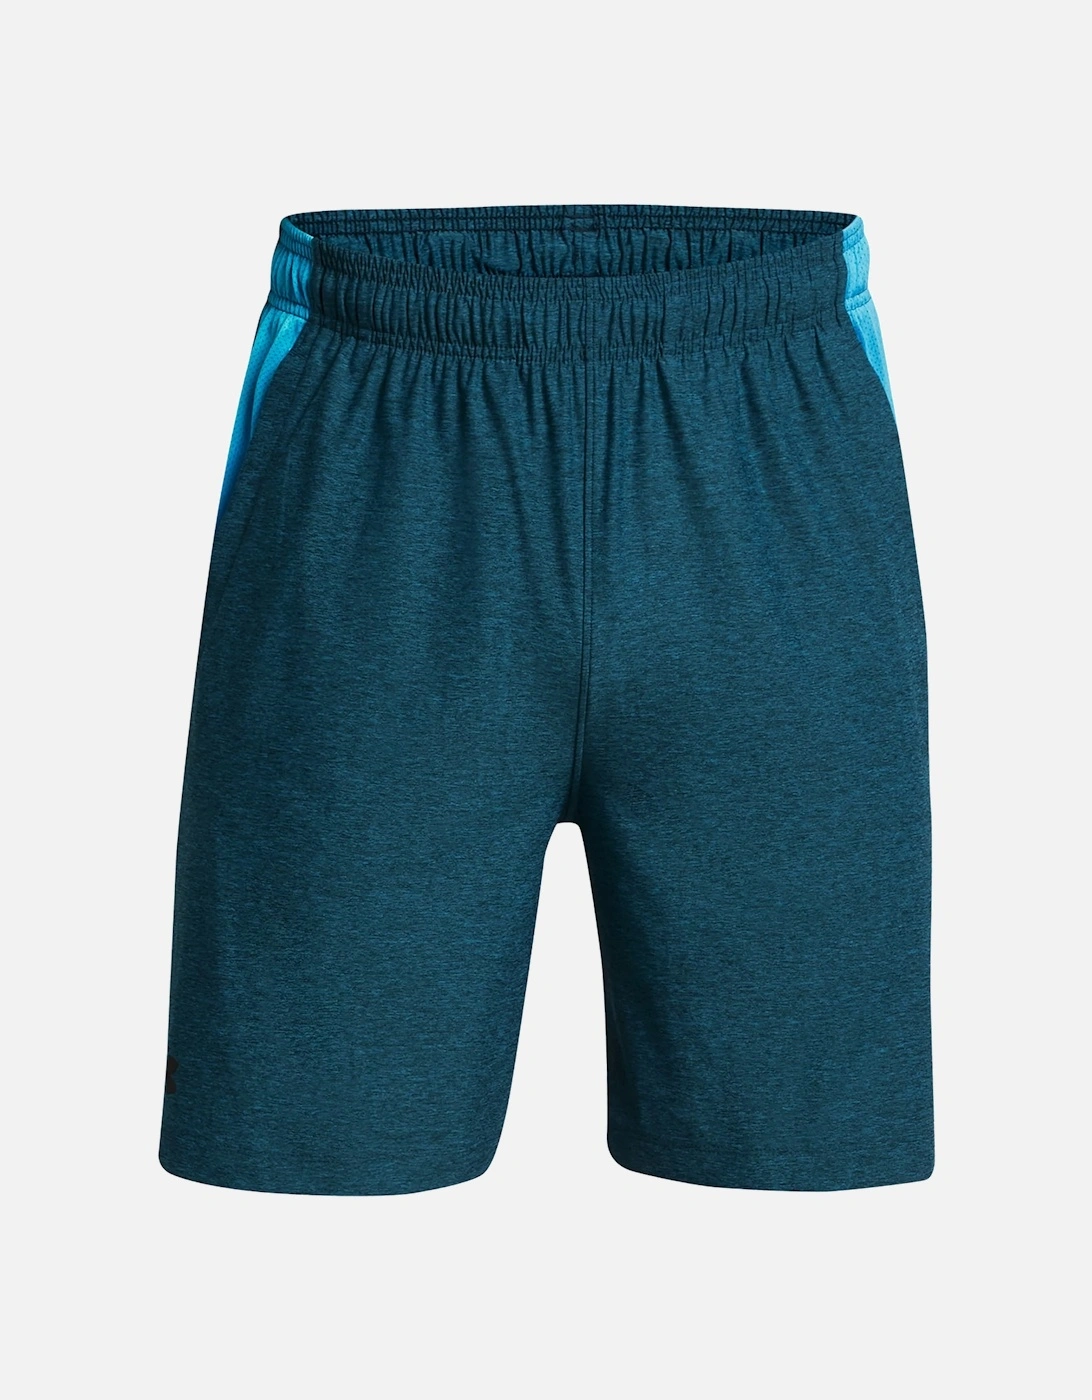 Mens Tech Vent Shorts (Blue)